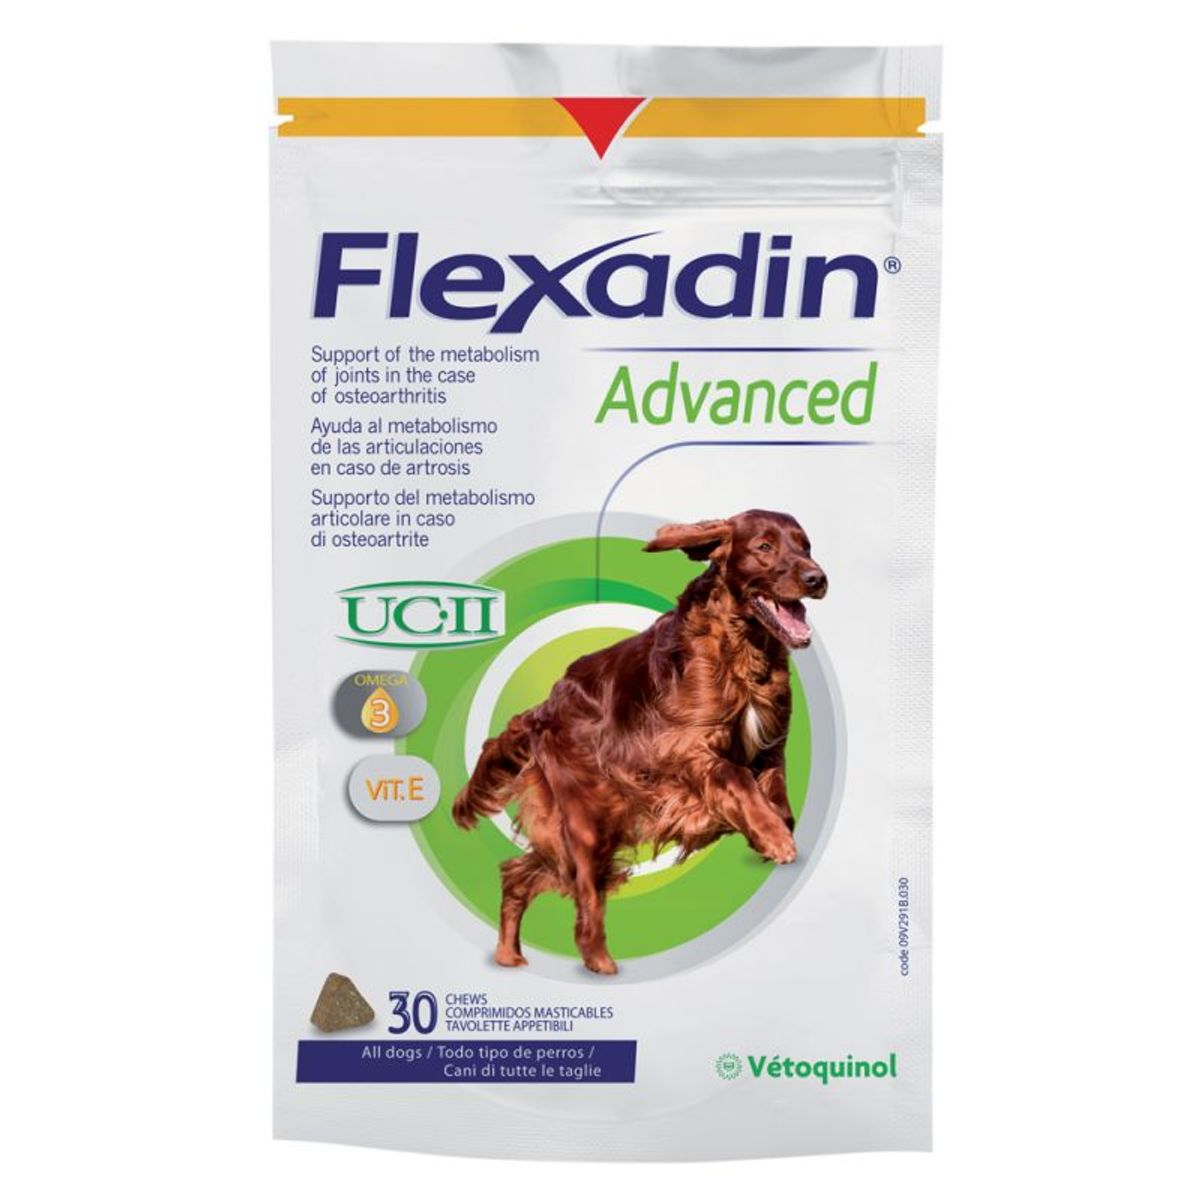 Flexadin Advanced - Vetoquinol